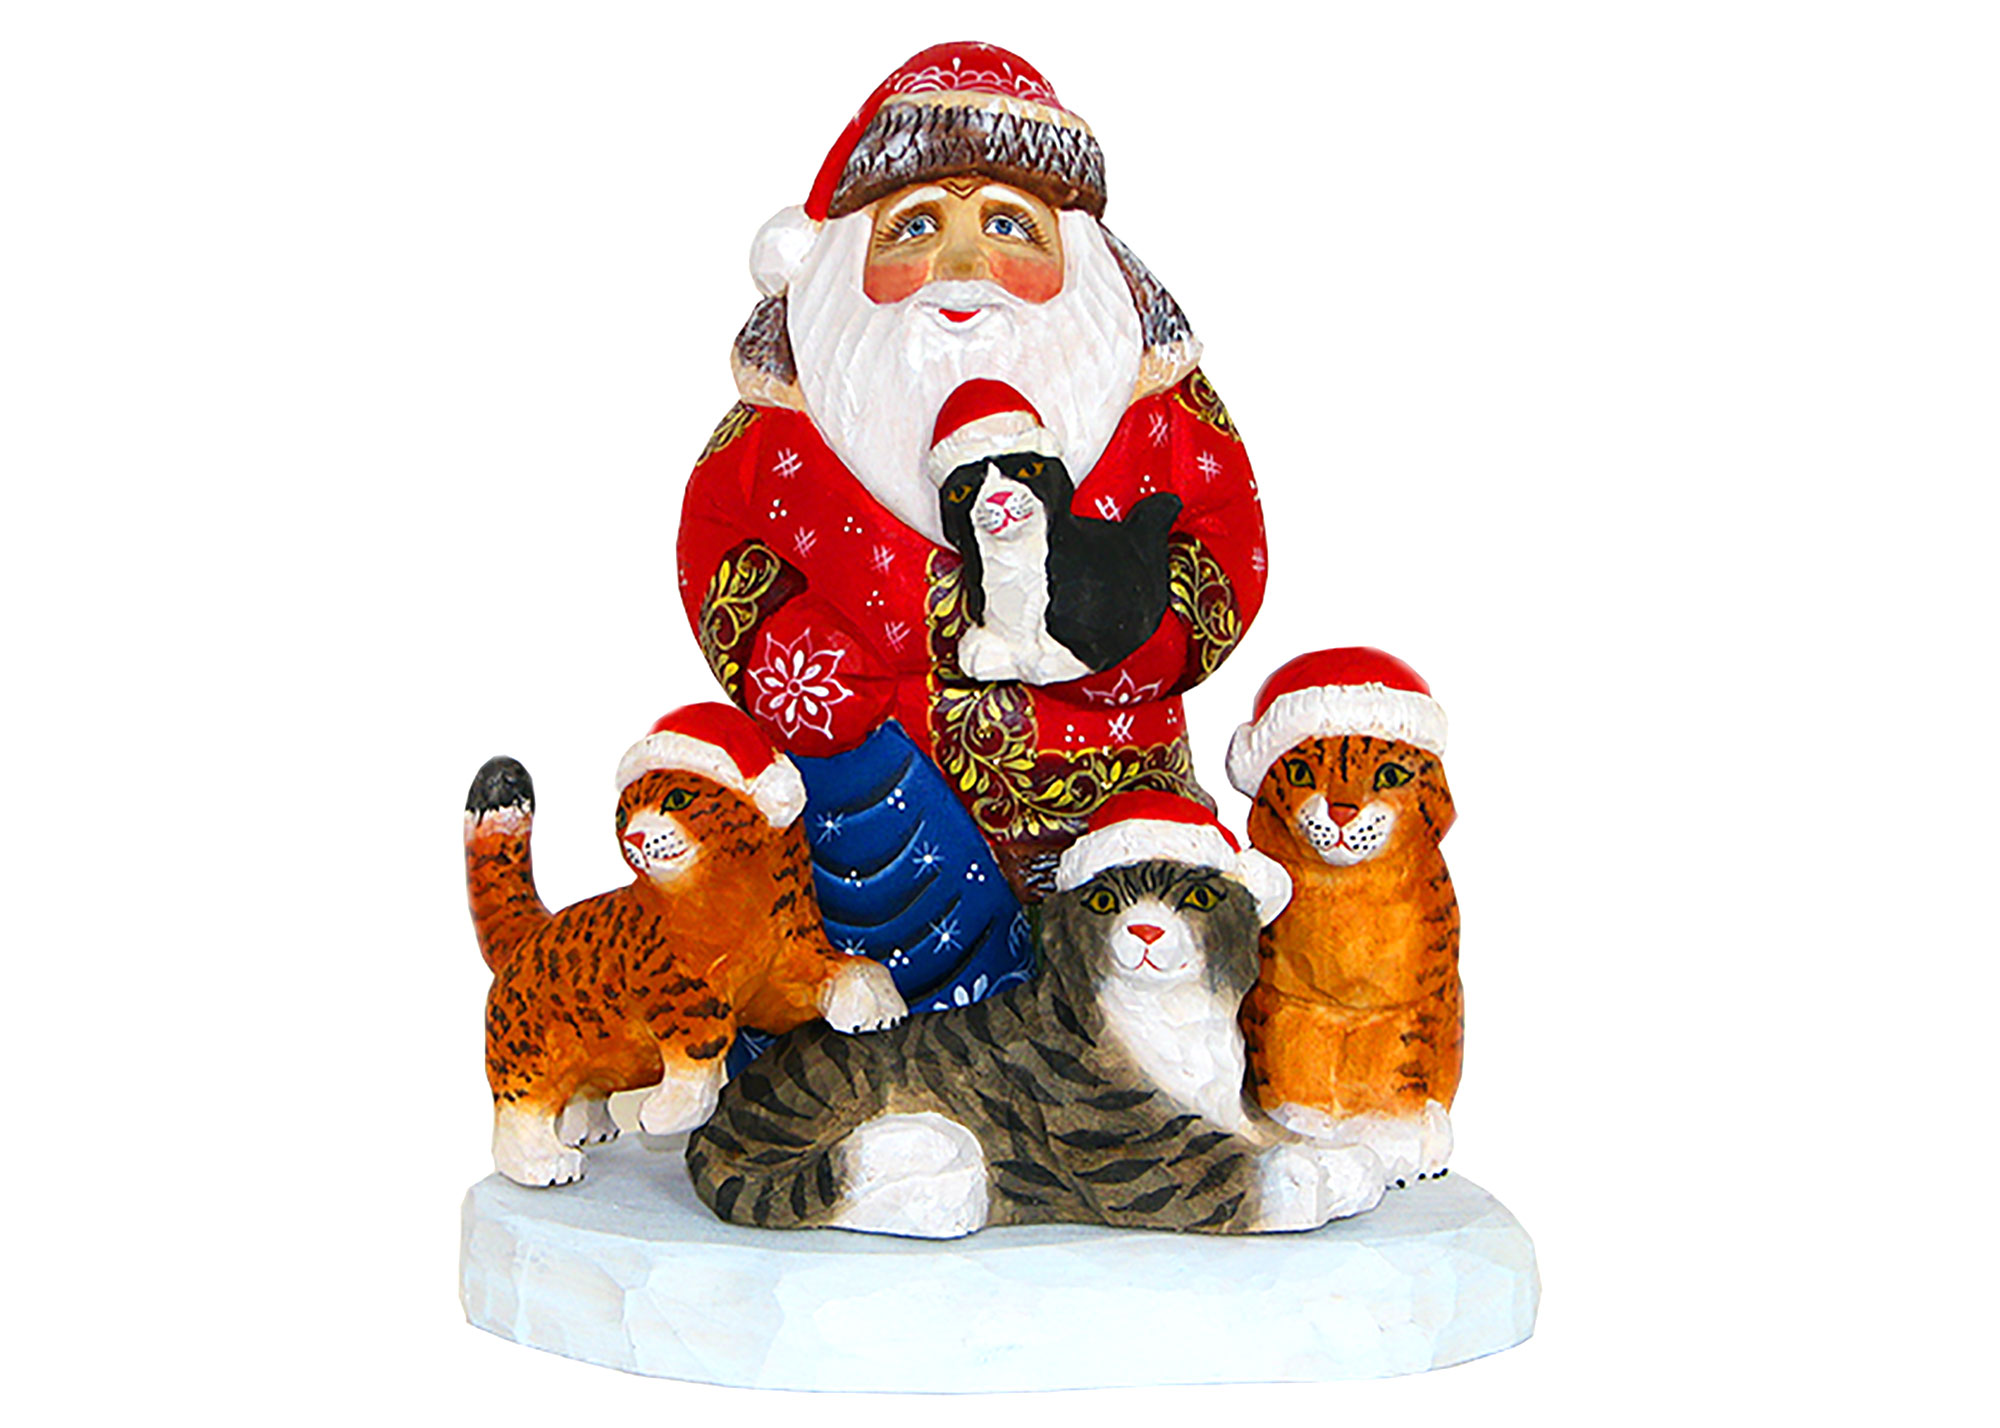 Buy Santa with Kittens Wood Carving at GoldenCockerel.com